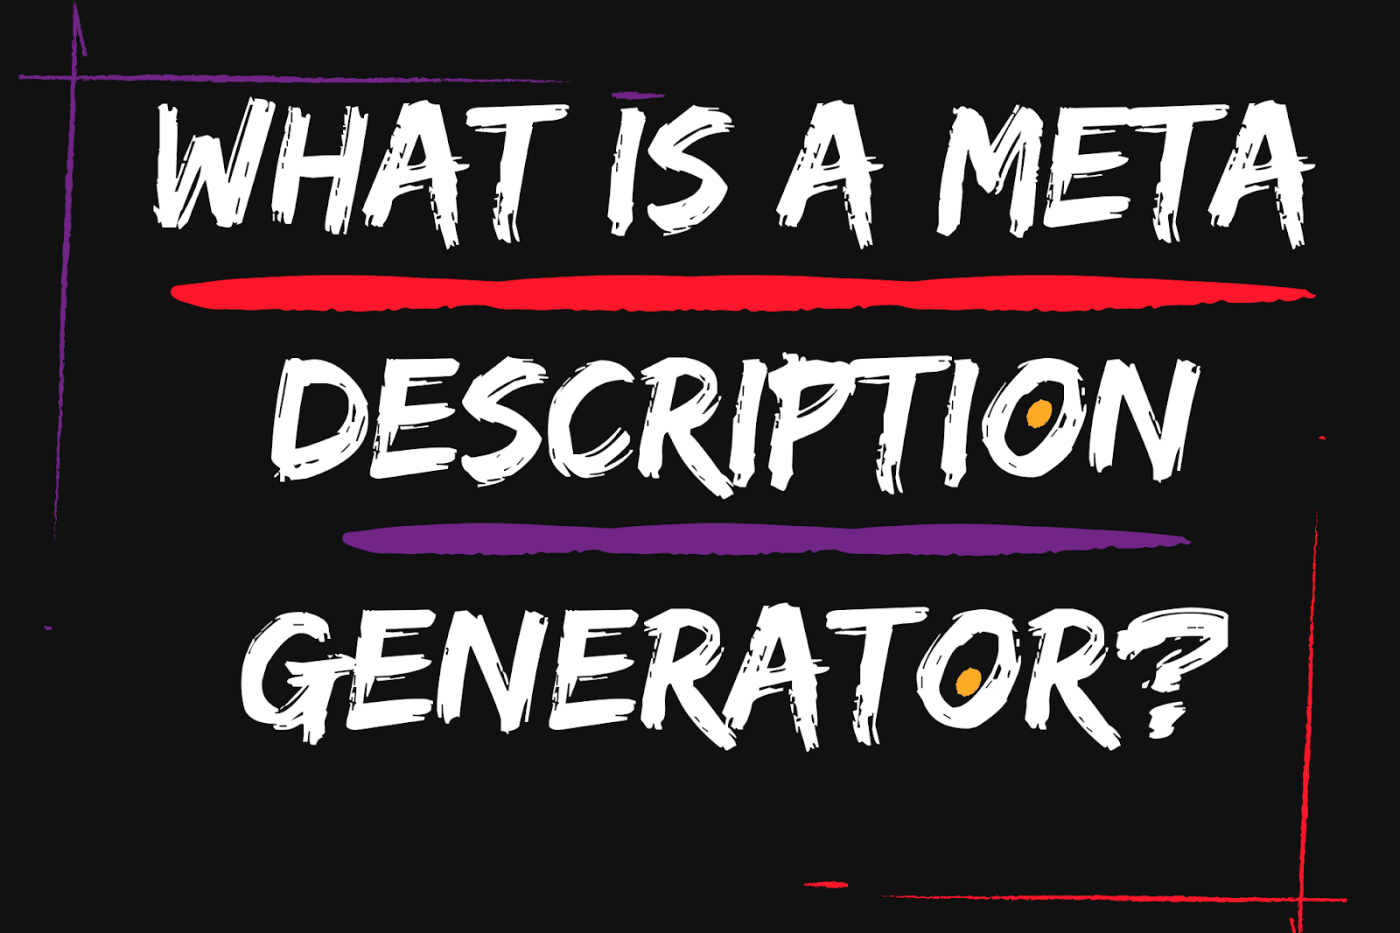 Meta Description Generator